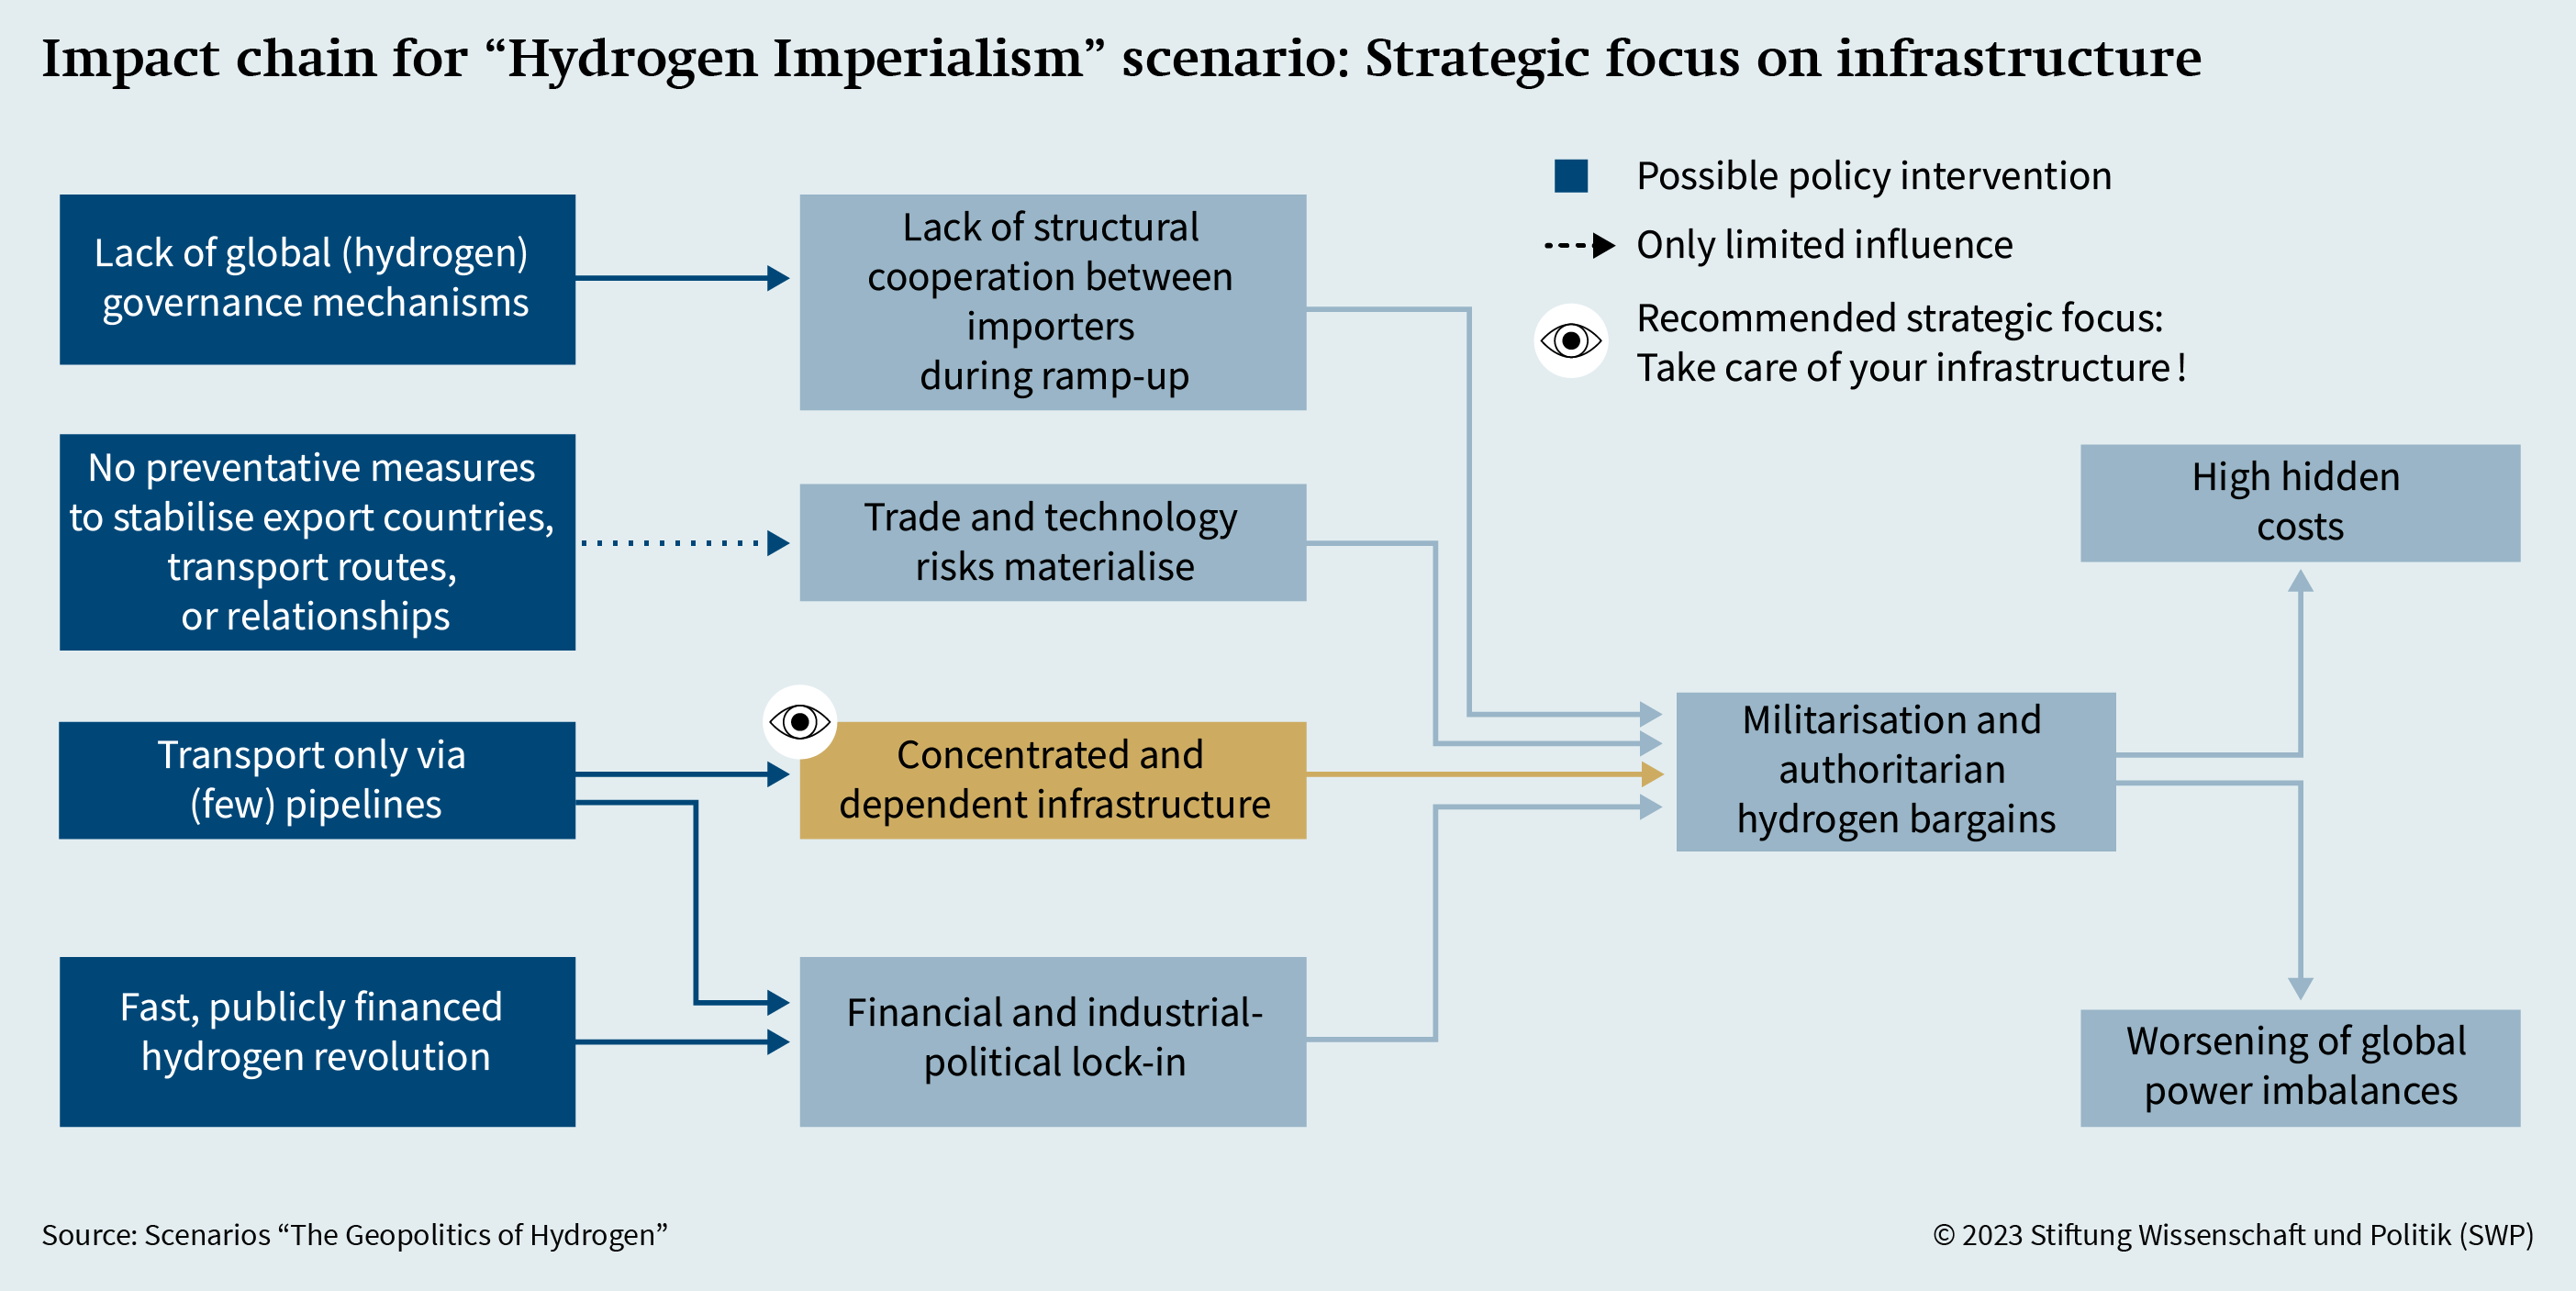 Figure 7: Impact chain for "Hydrogen Imperialism" scenario: Strategic focus on infrastructure